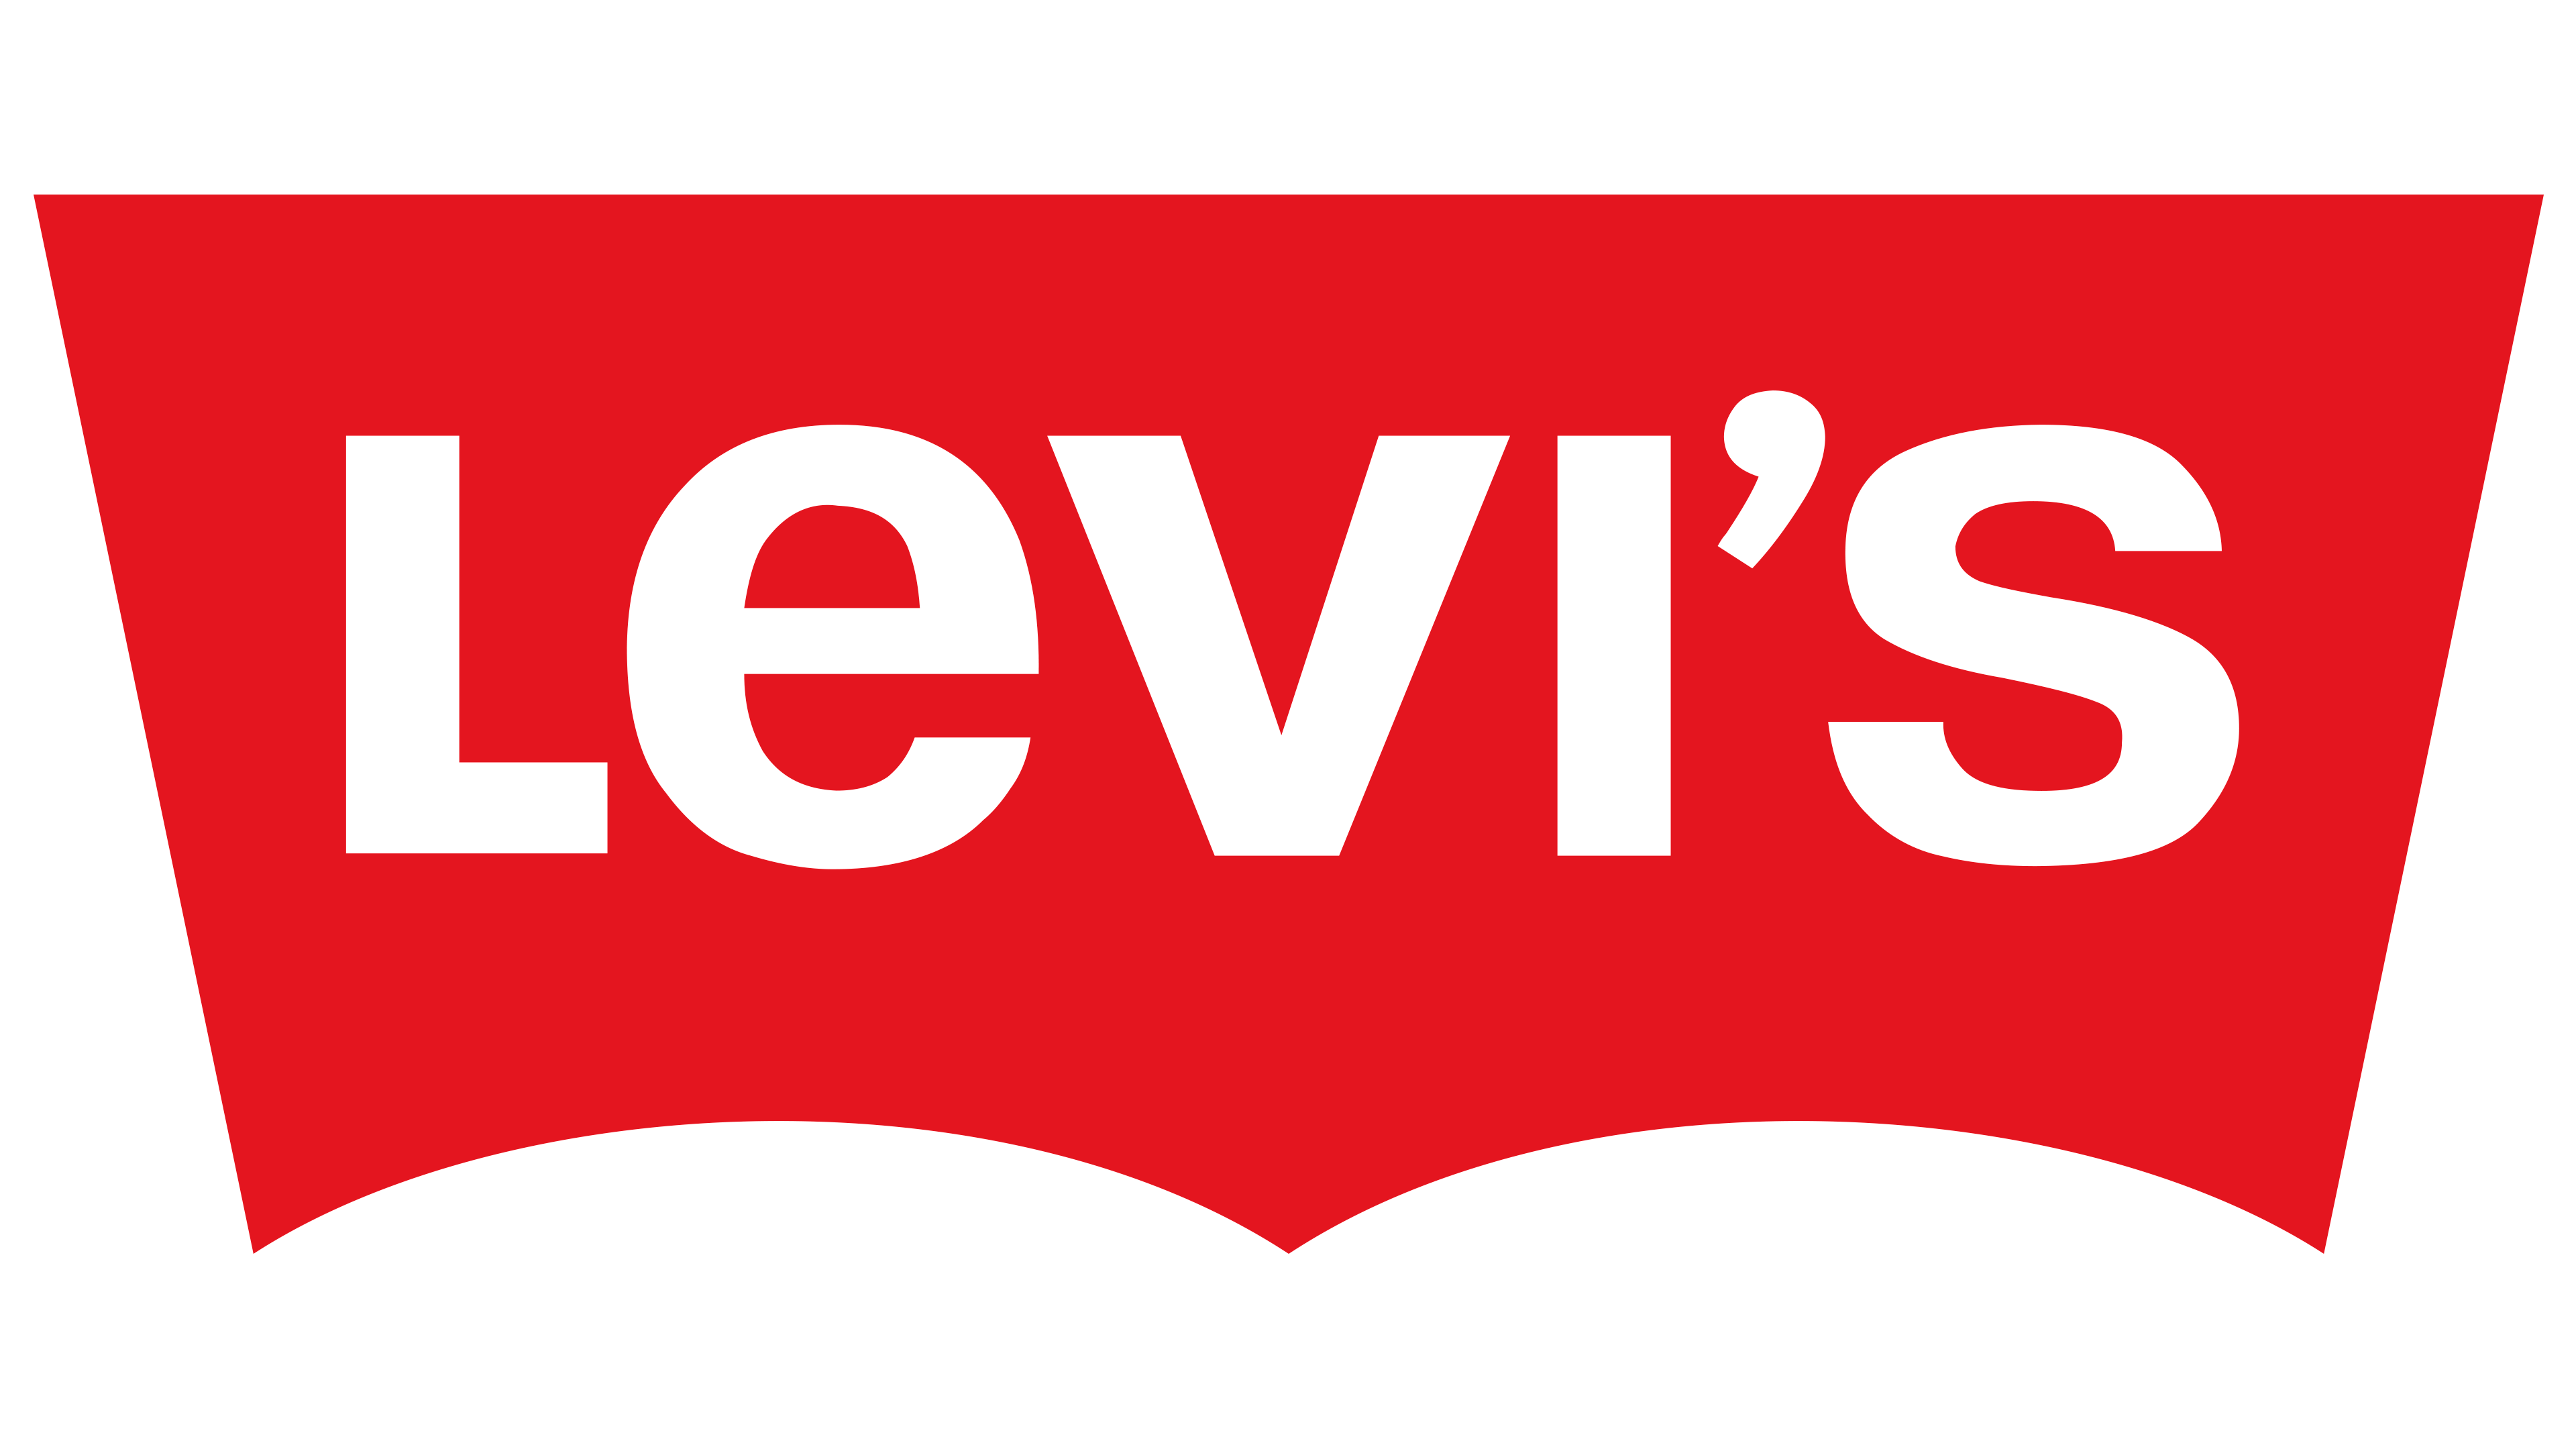 levi's logo